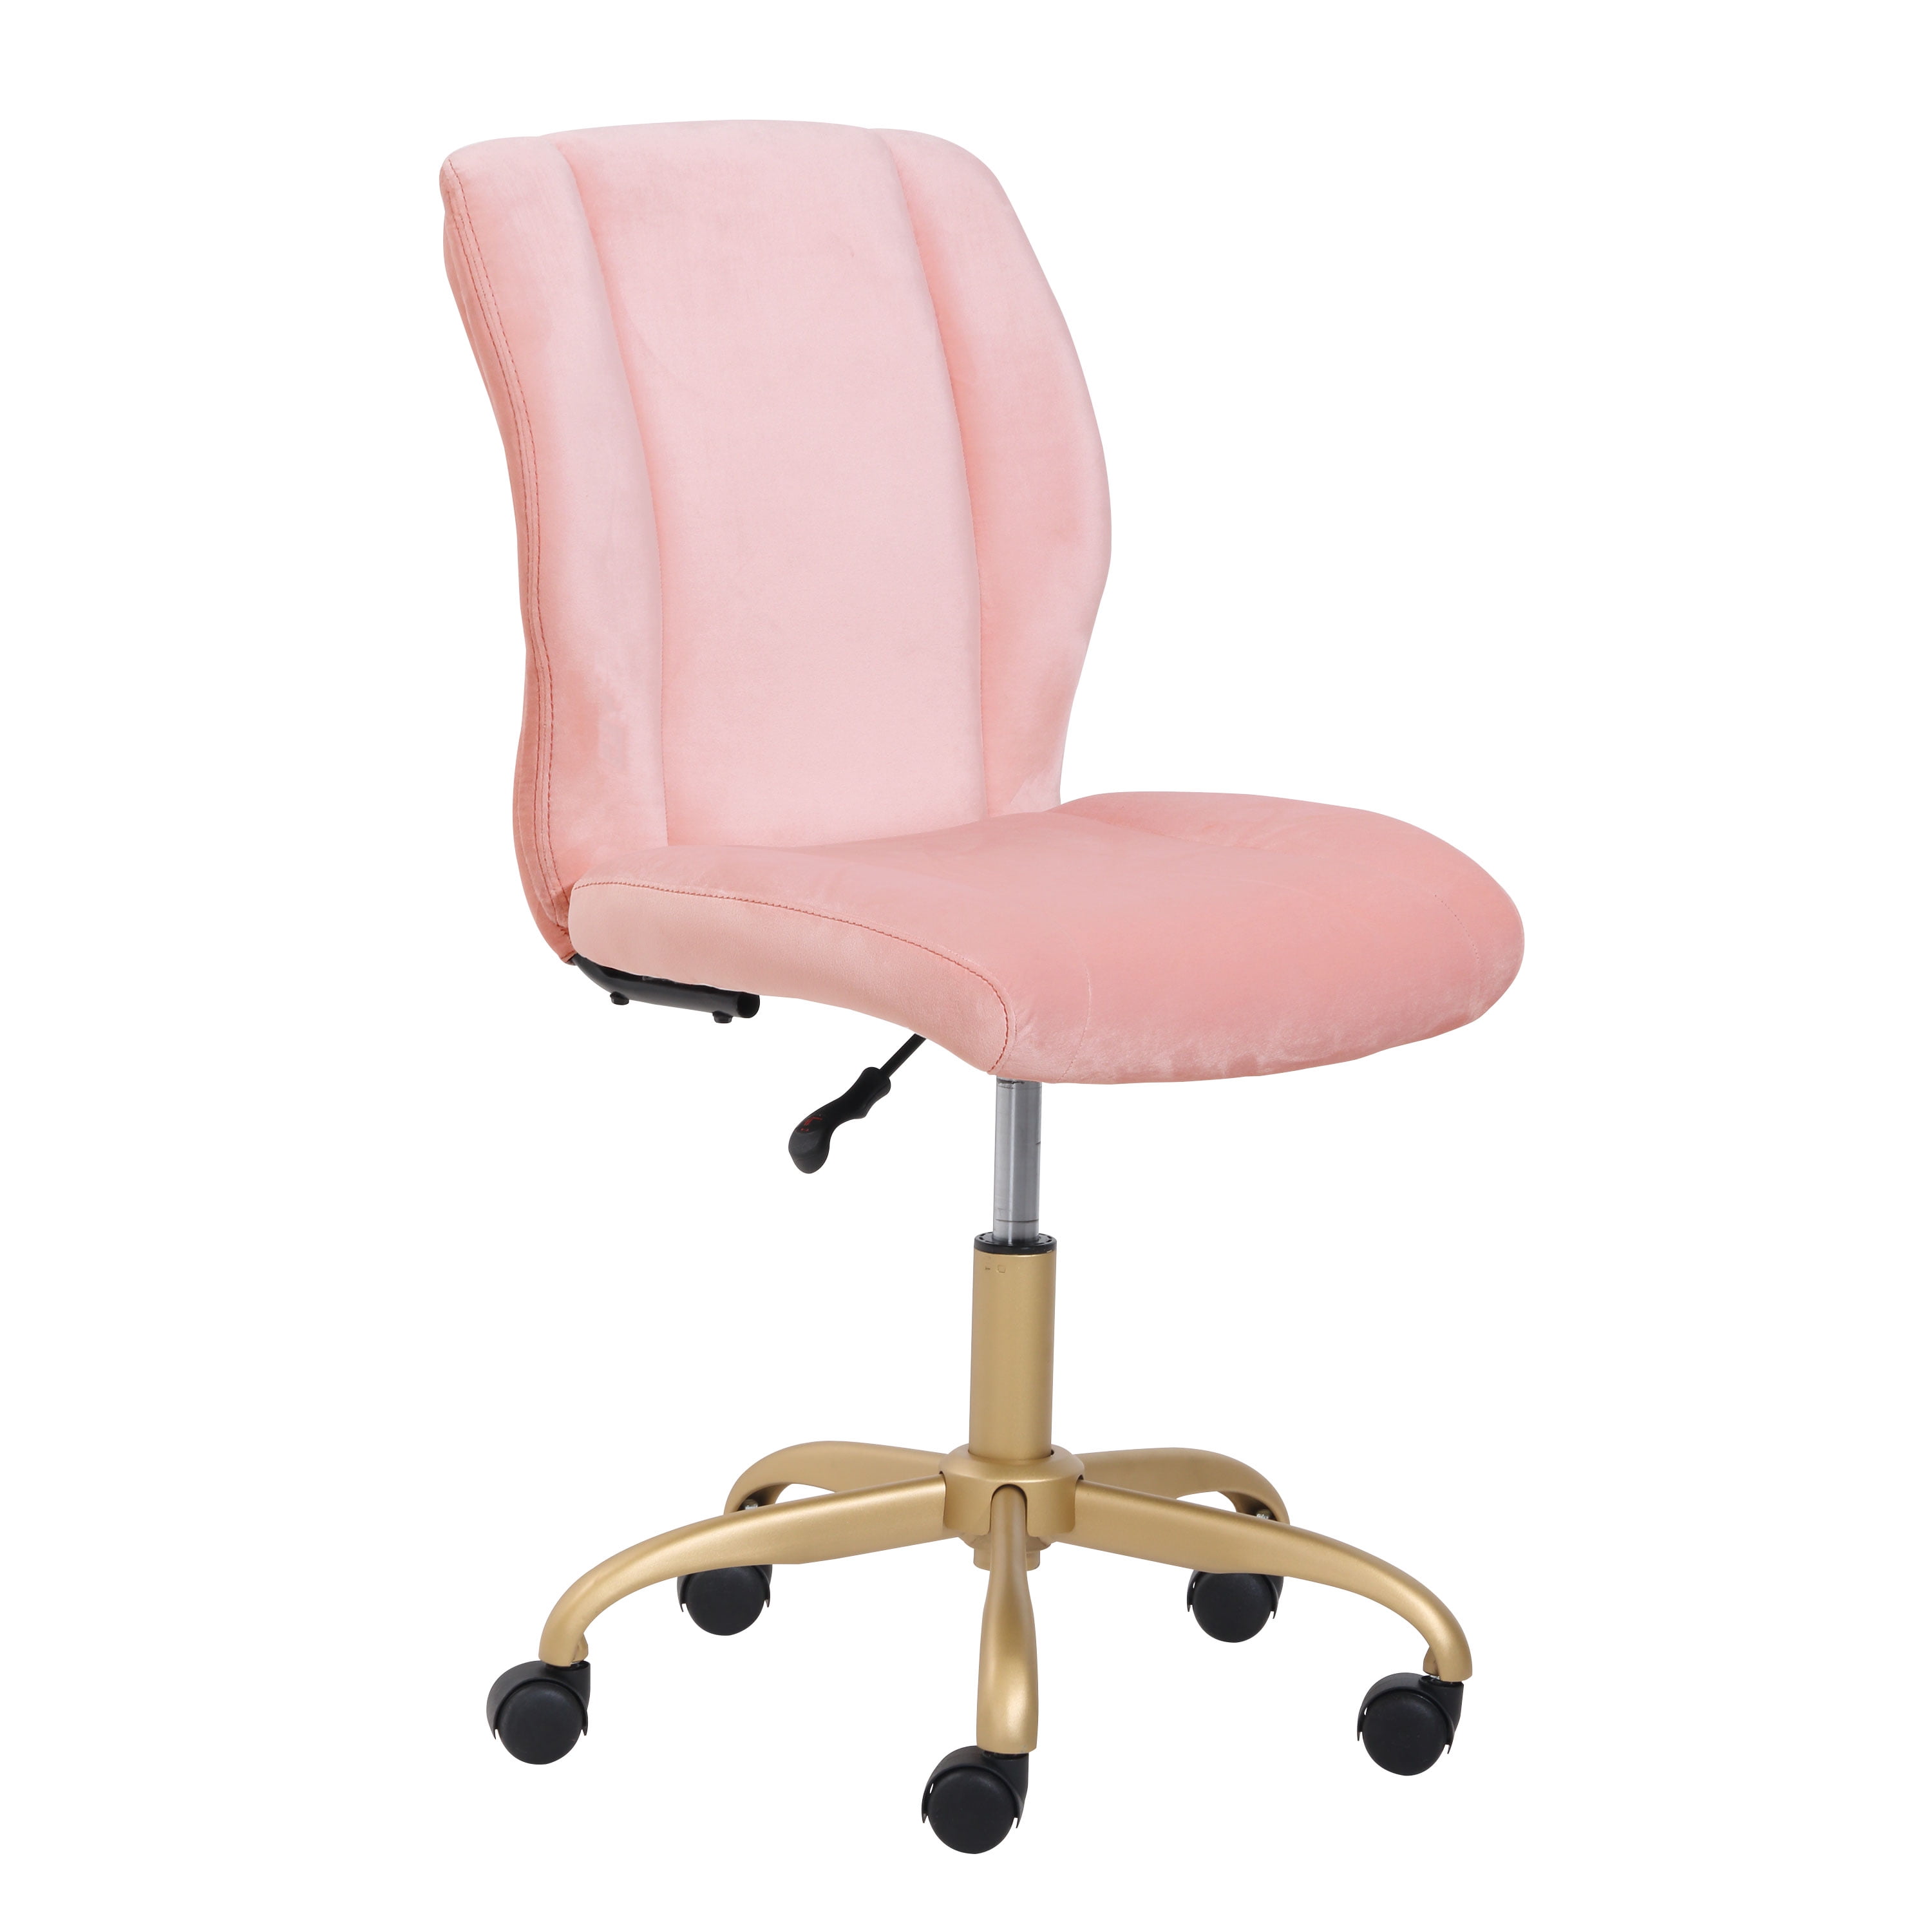 Mainstays Plush Velvet Office Chair Pearl Blush Walmart Com Walmart Com Pink adjustable height chair with gas lift. mainstays plush velvet office chair pearl blush walmart com